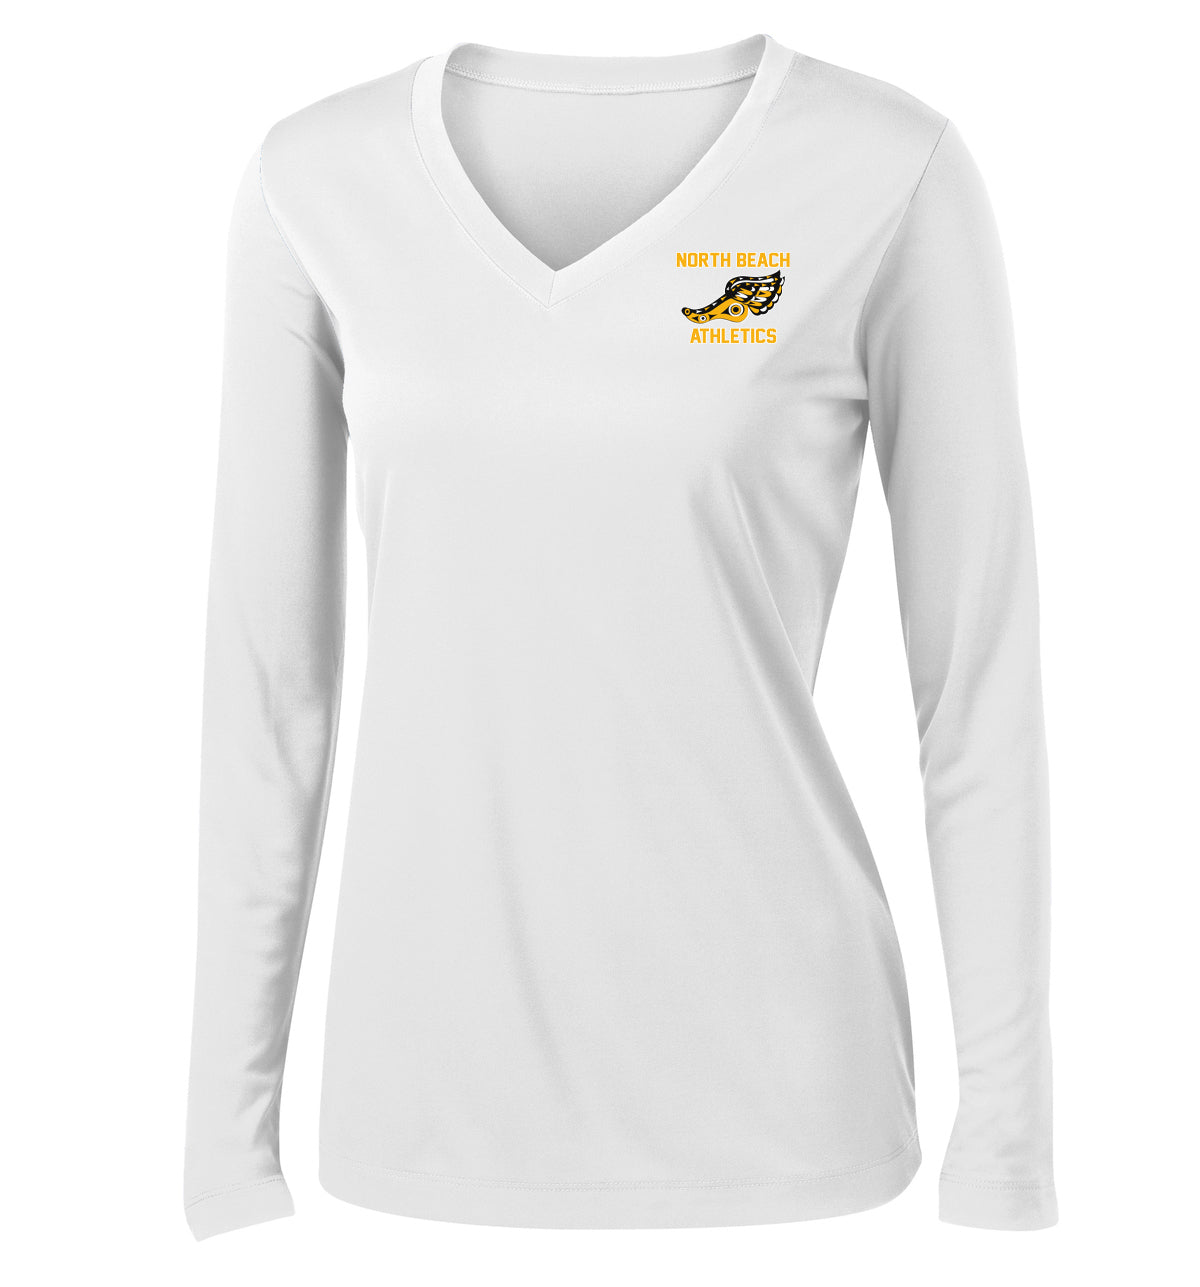 North Beach Athletics Women's Long Sleeve Performance Shirt